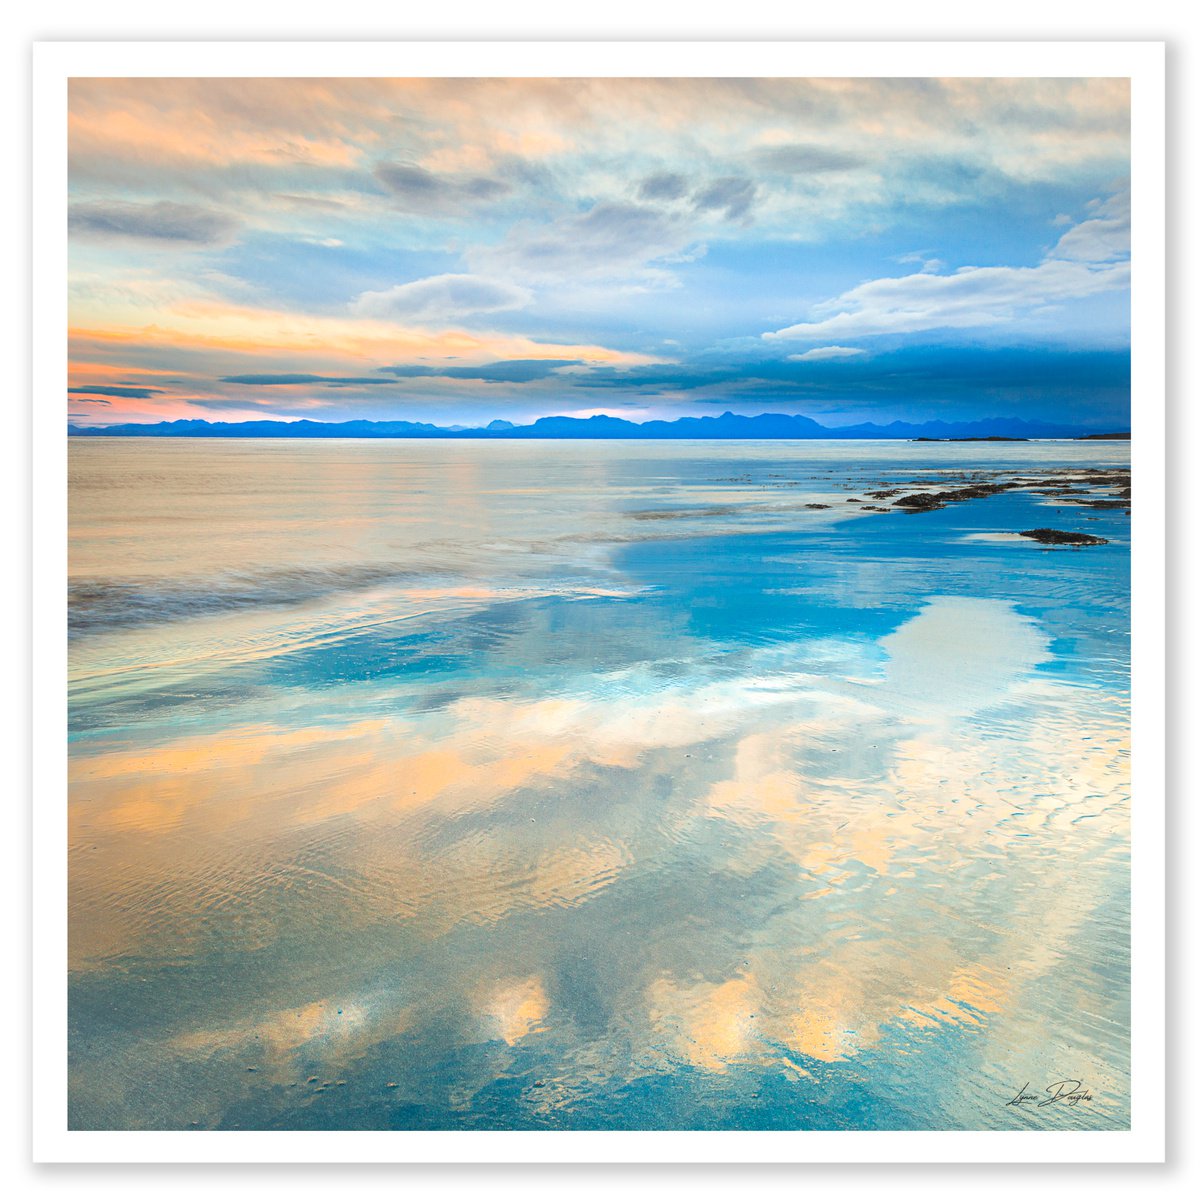 Impressionist Seascape - Reflecting on Blue by Lynne Douglas